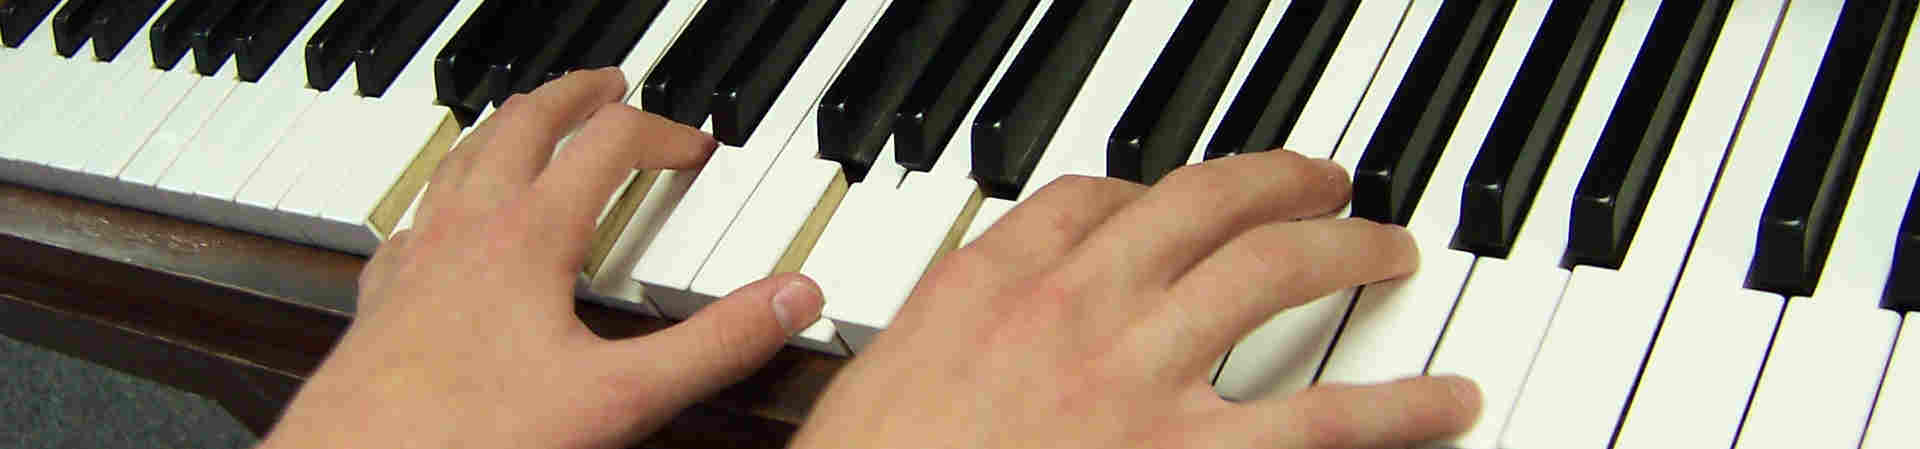 Clases de piano online